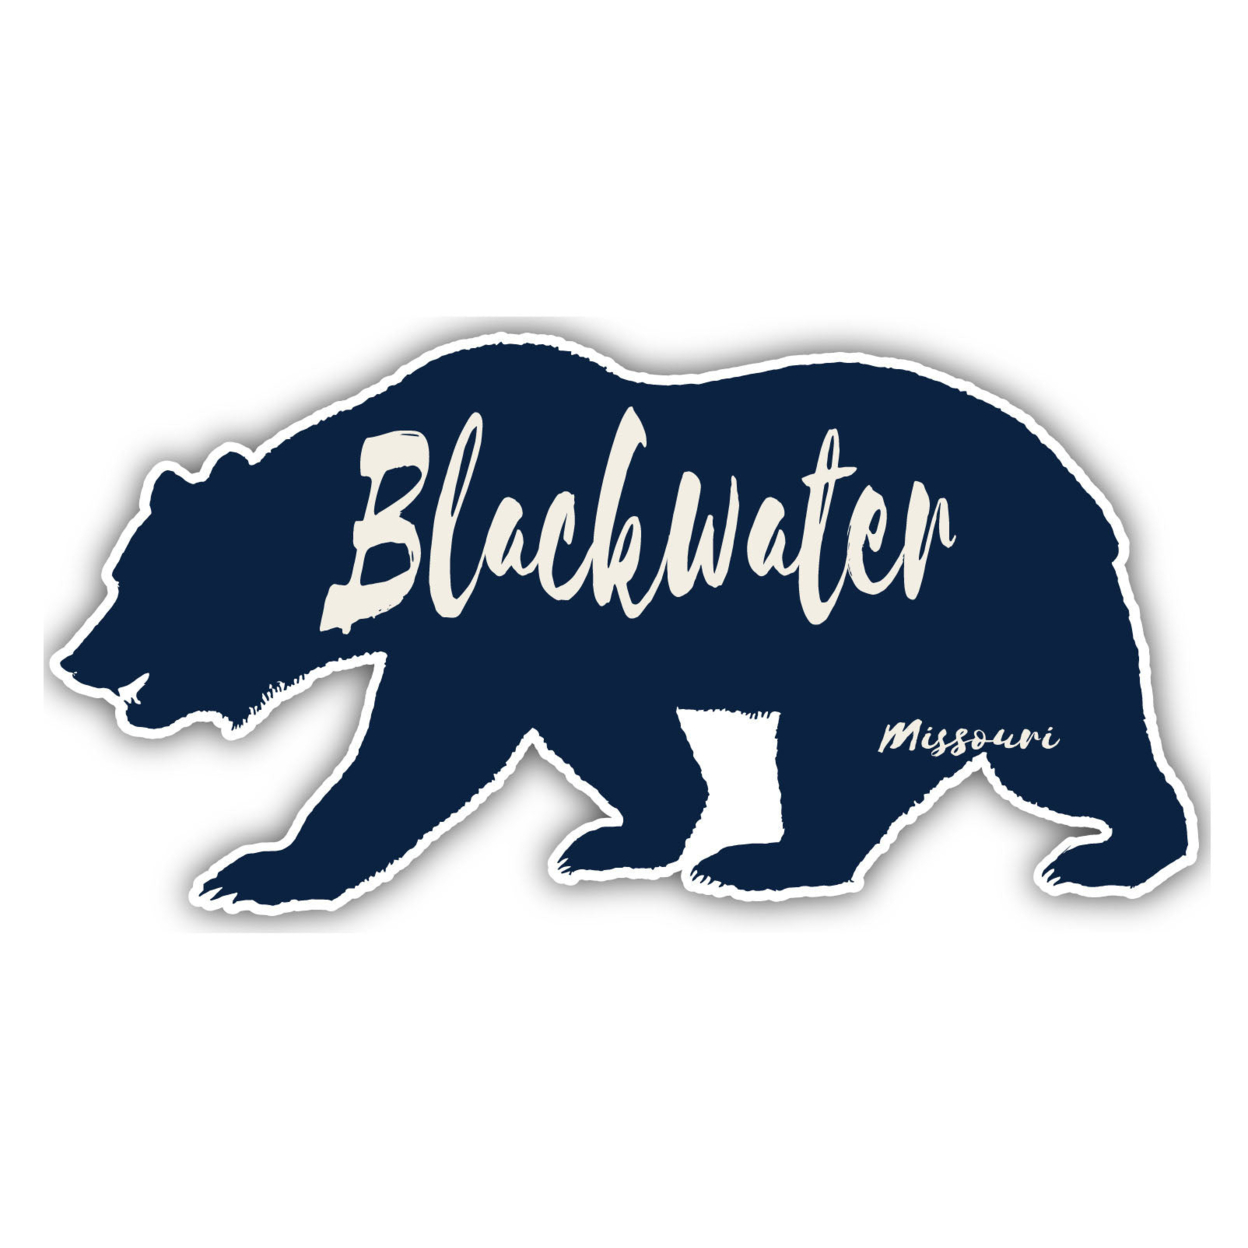 Blackwater Missouri Souvenir Decorative Stickers (Choose Theme And Size) - 4-Pack, 12-Inch, Bear